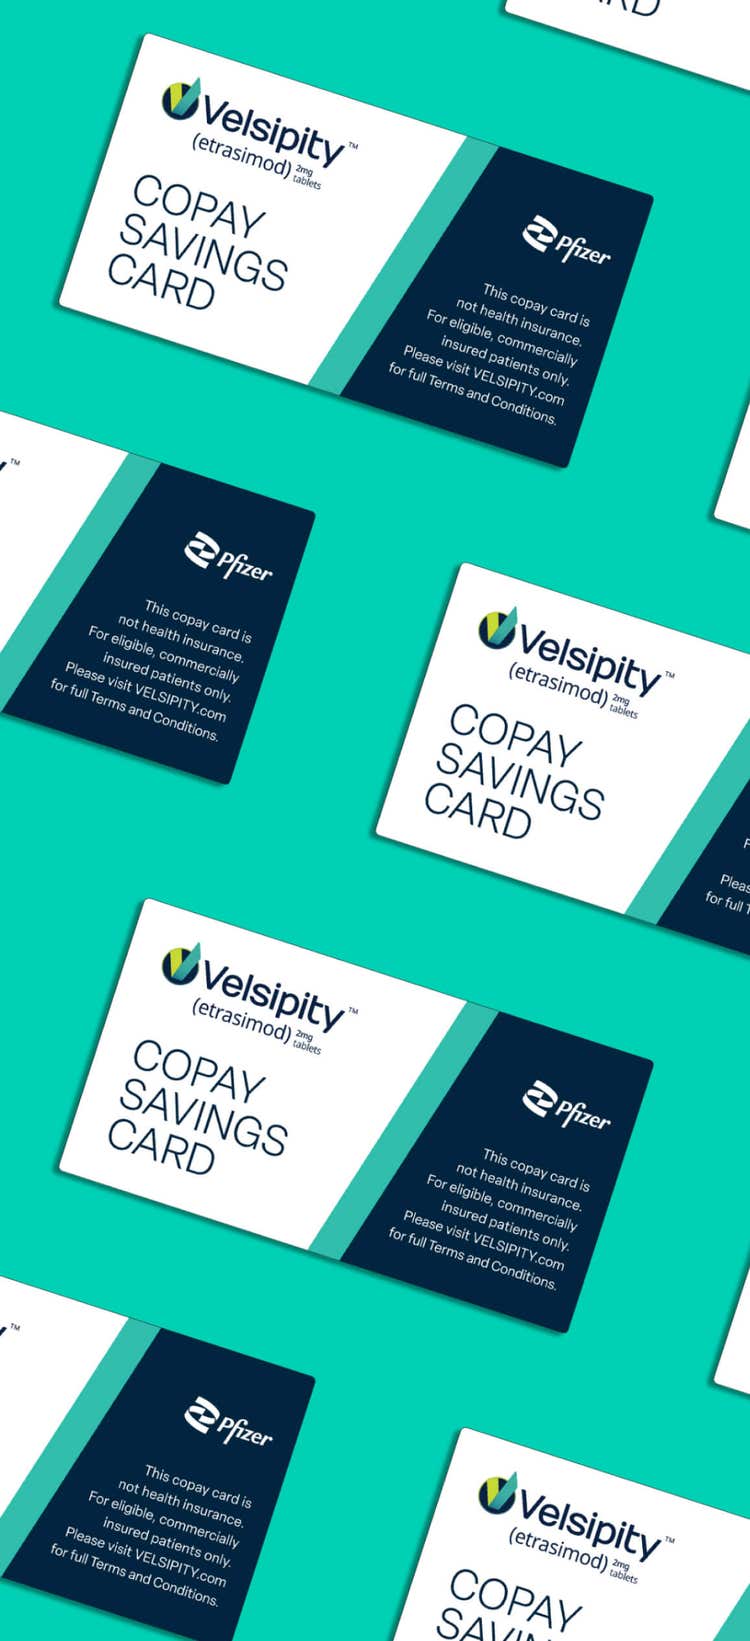 A Pfizer Velsipity co-pay savings program membership card.